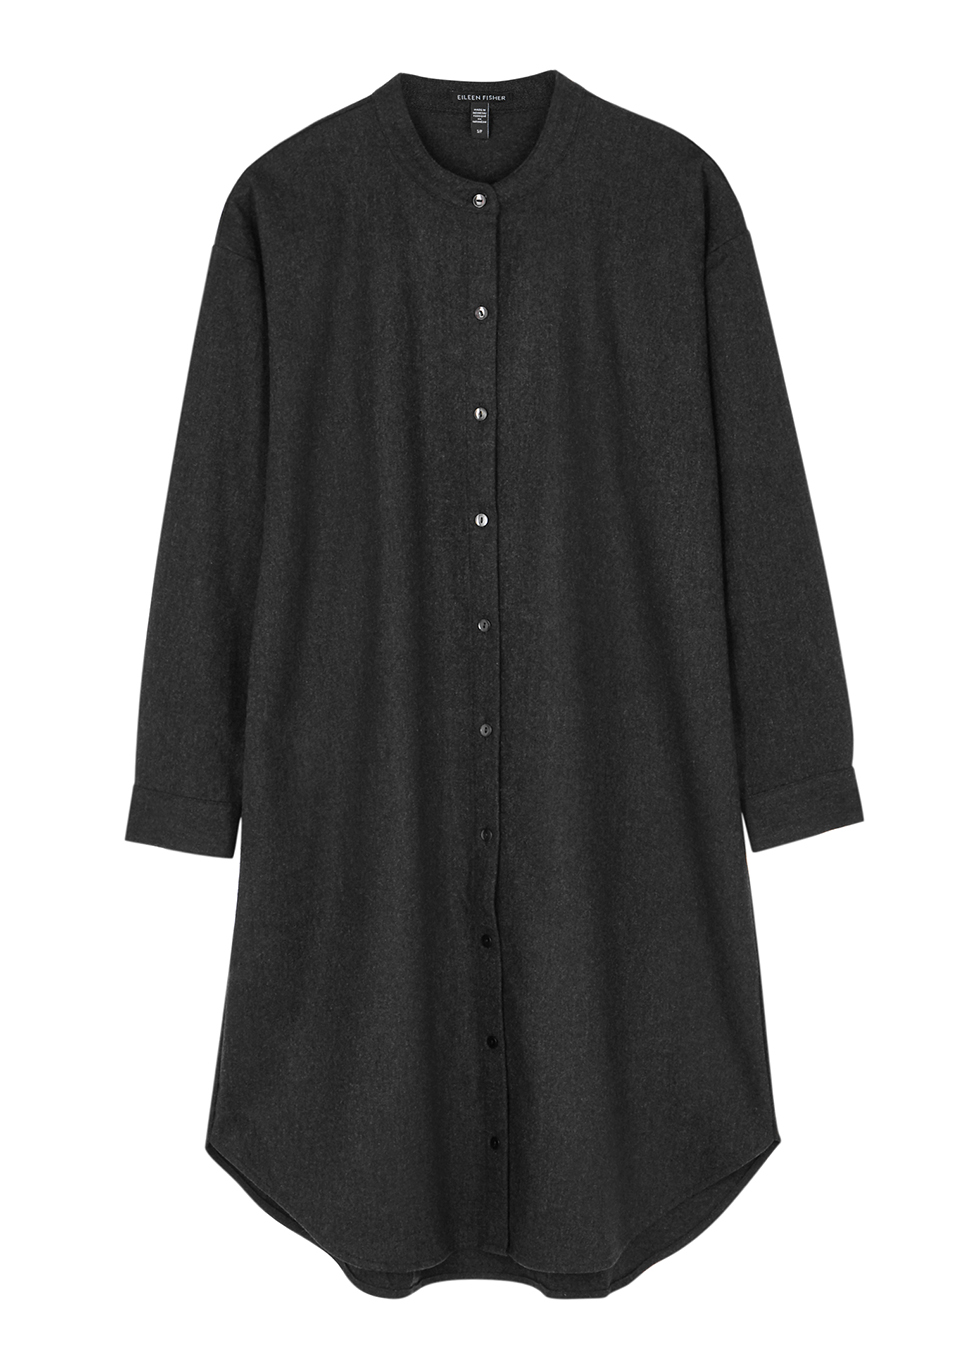 Charcoal wool-flannel shirt dress